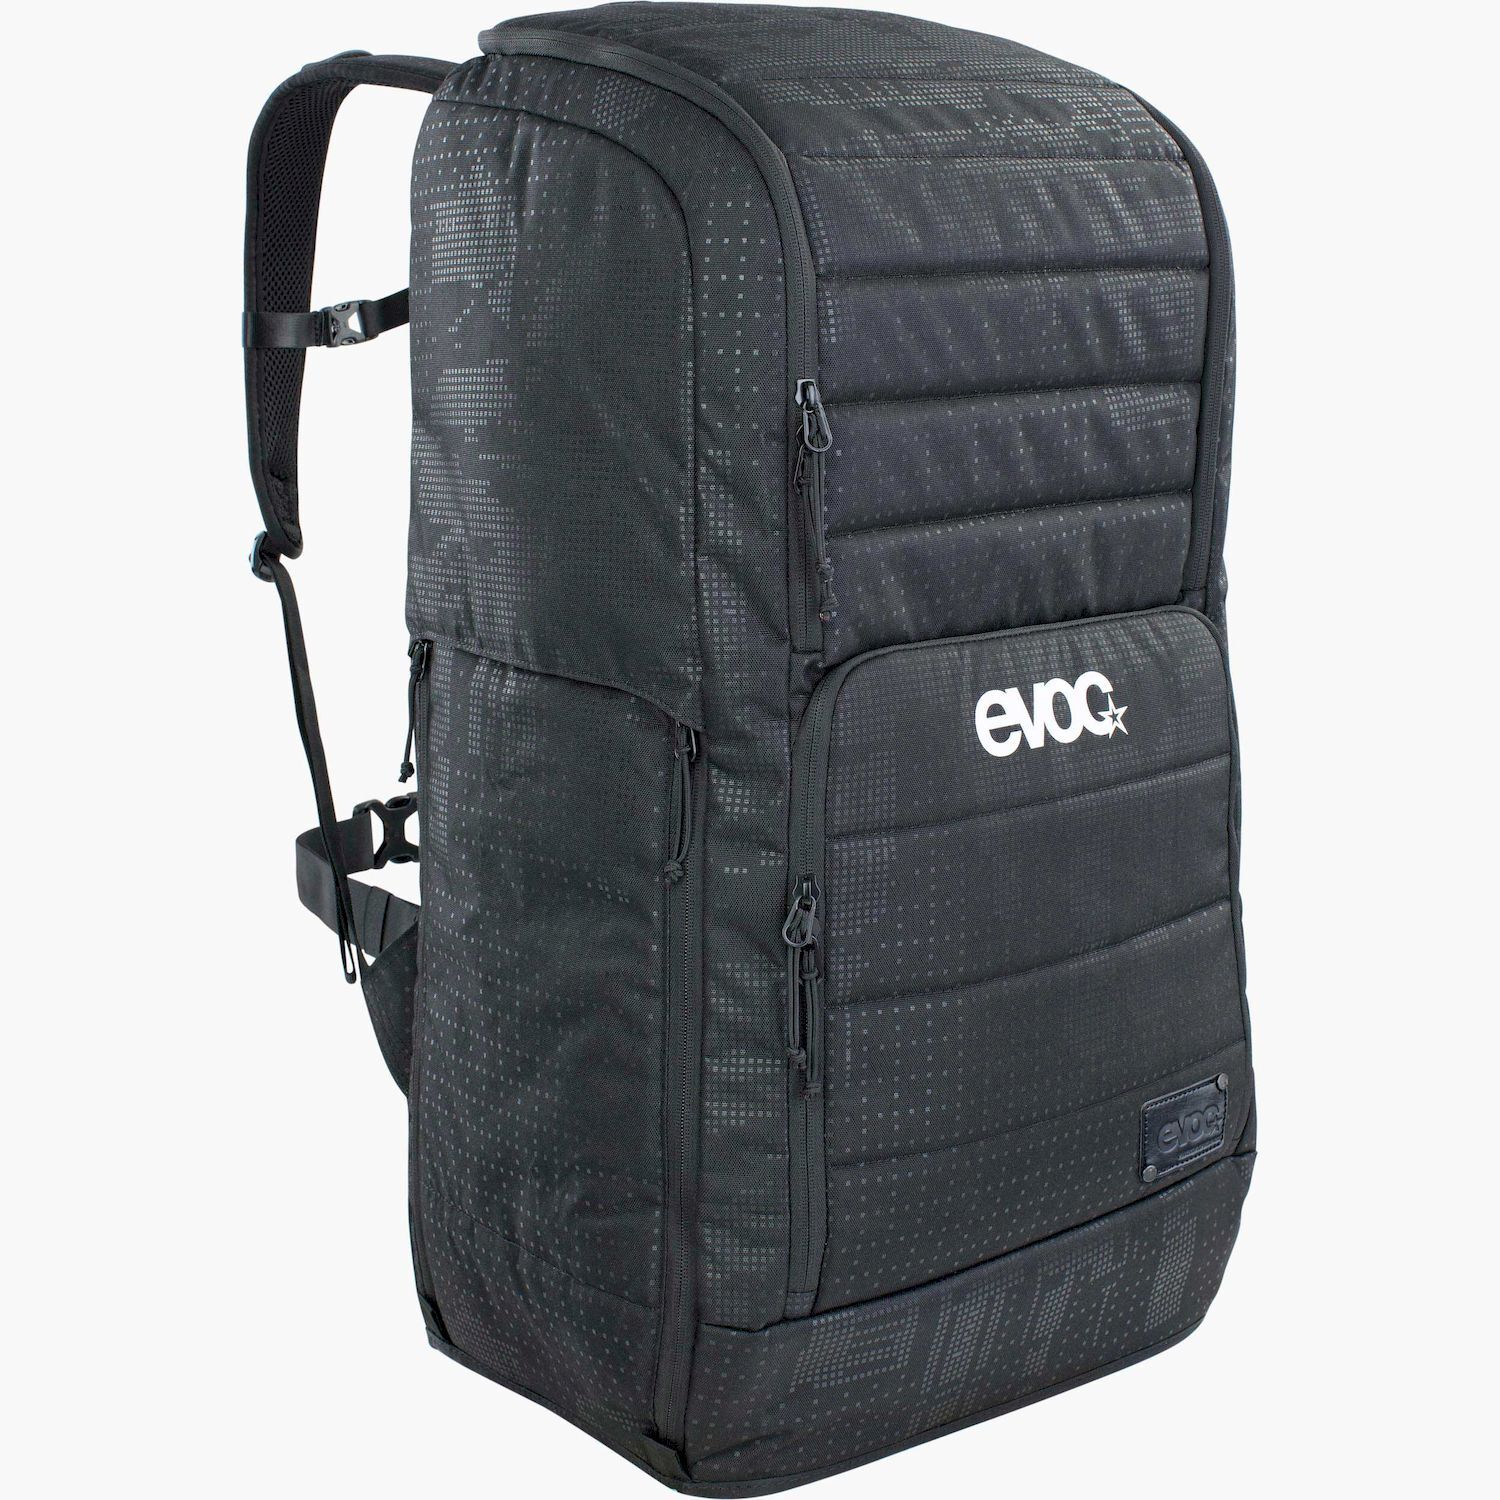 Evoc Gear Backpack 90 - Sacca portascarponi